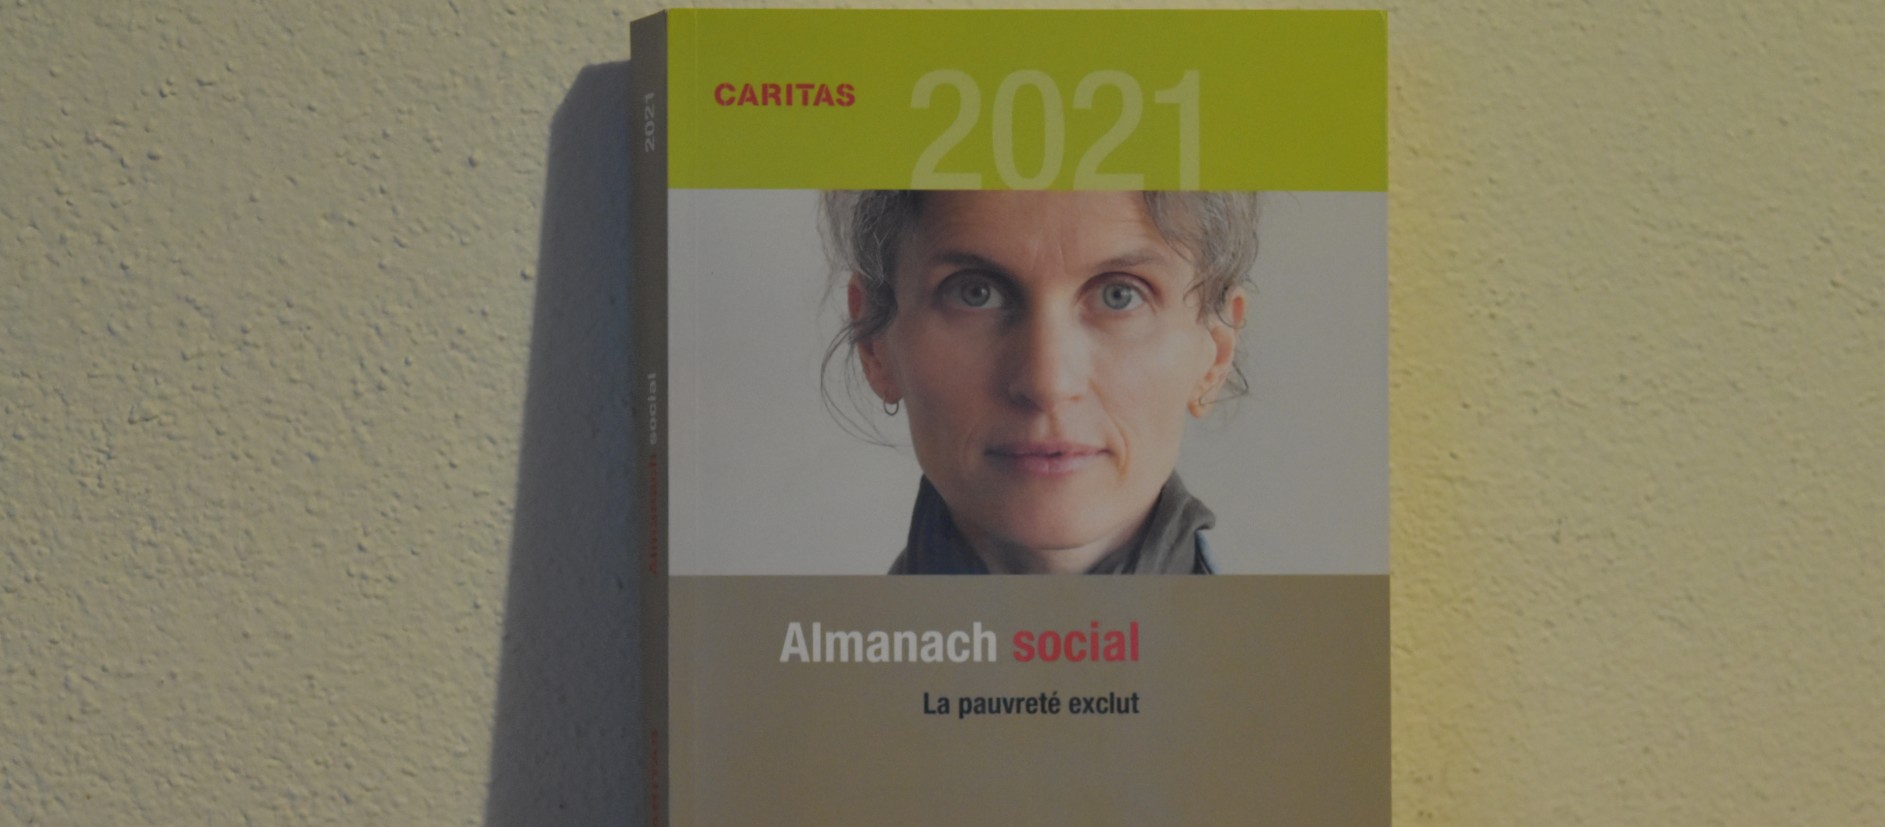 Caritas Suisse Almanach social 2021  | © Jacques Berset